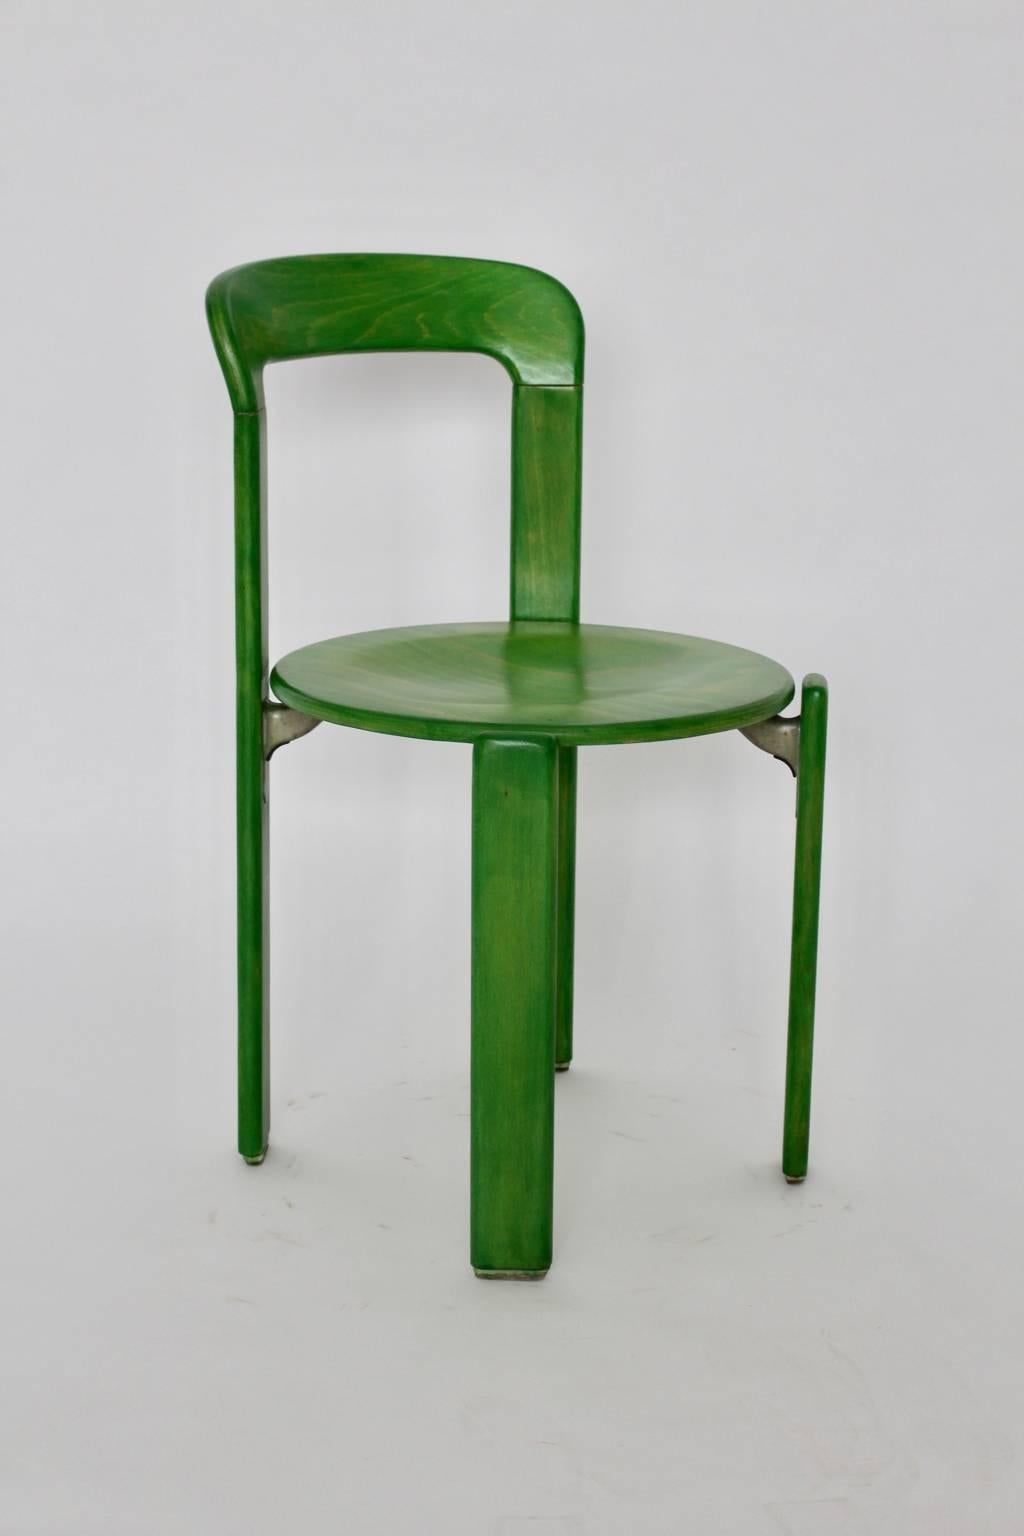 Swiss Green Dining Room Chairs by Bruno Rey 1971 Switzerland